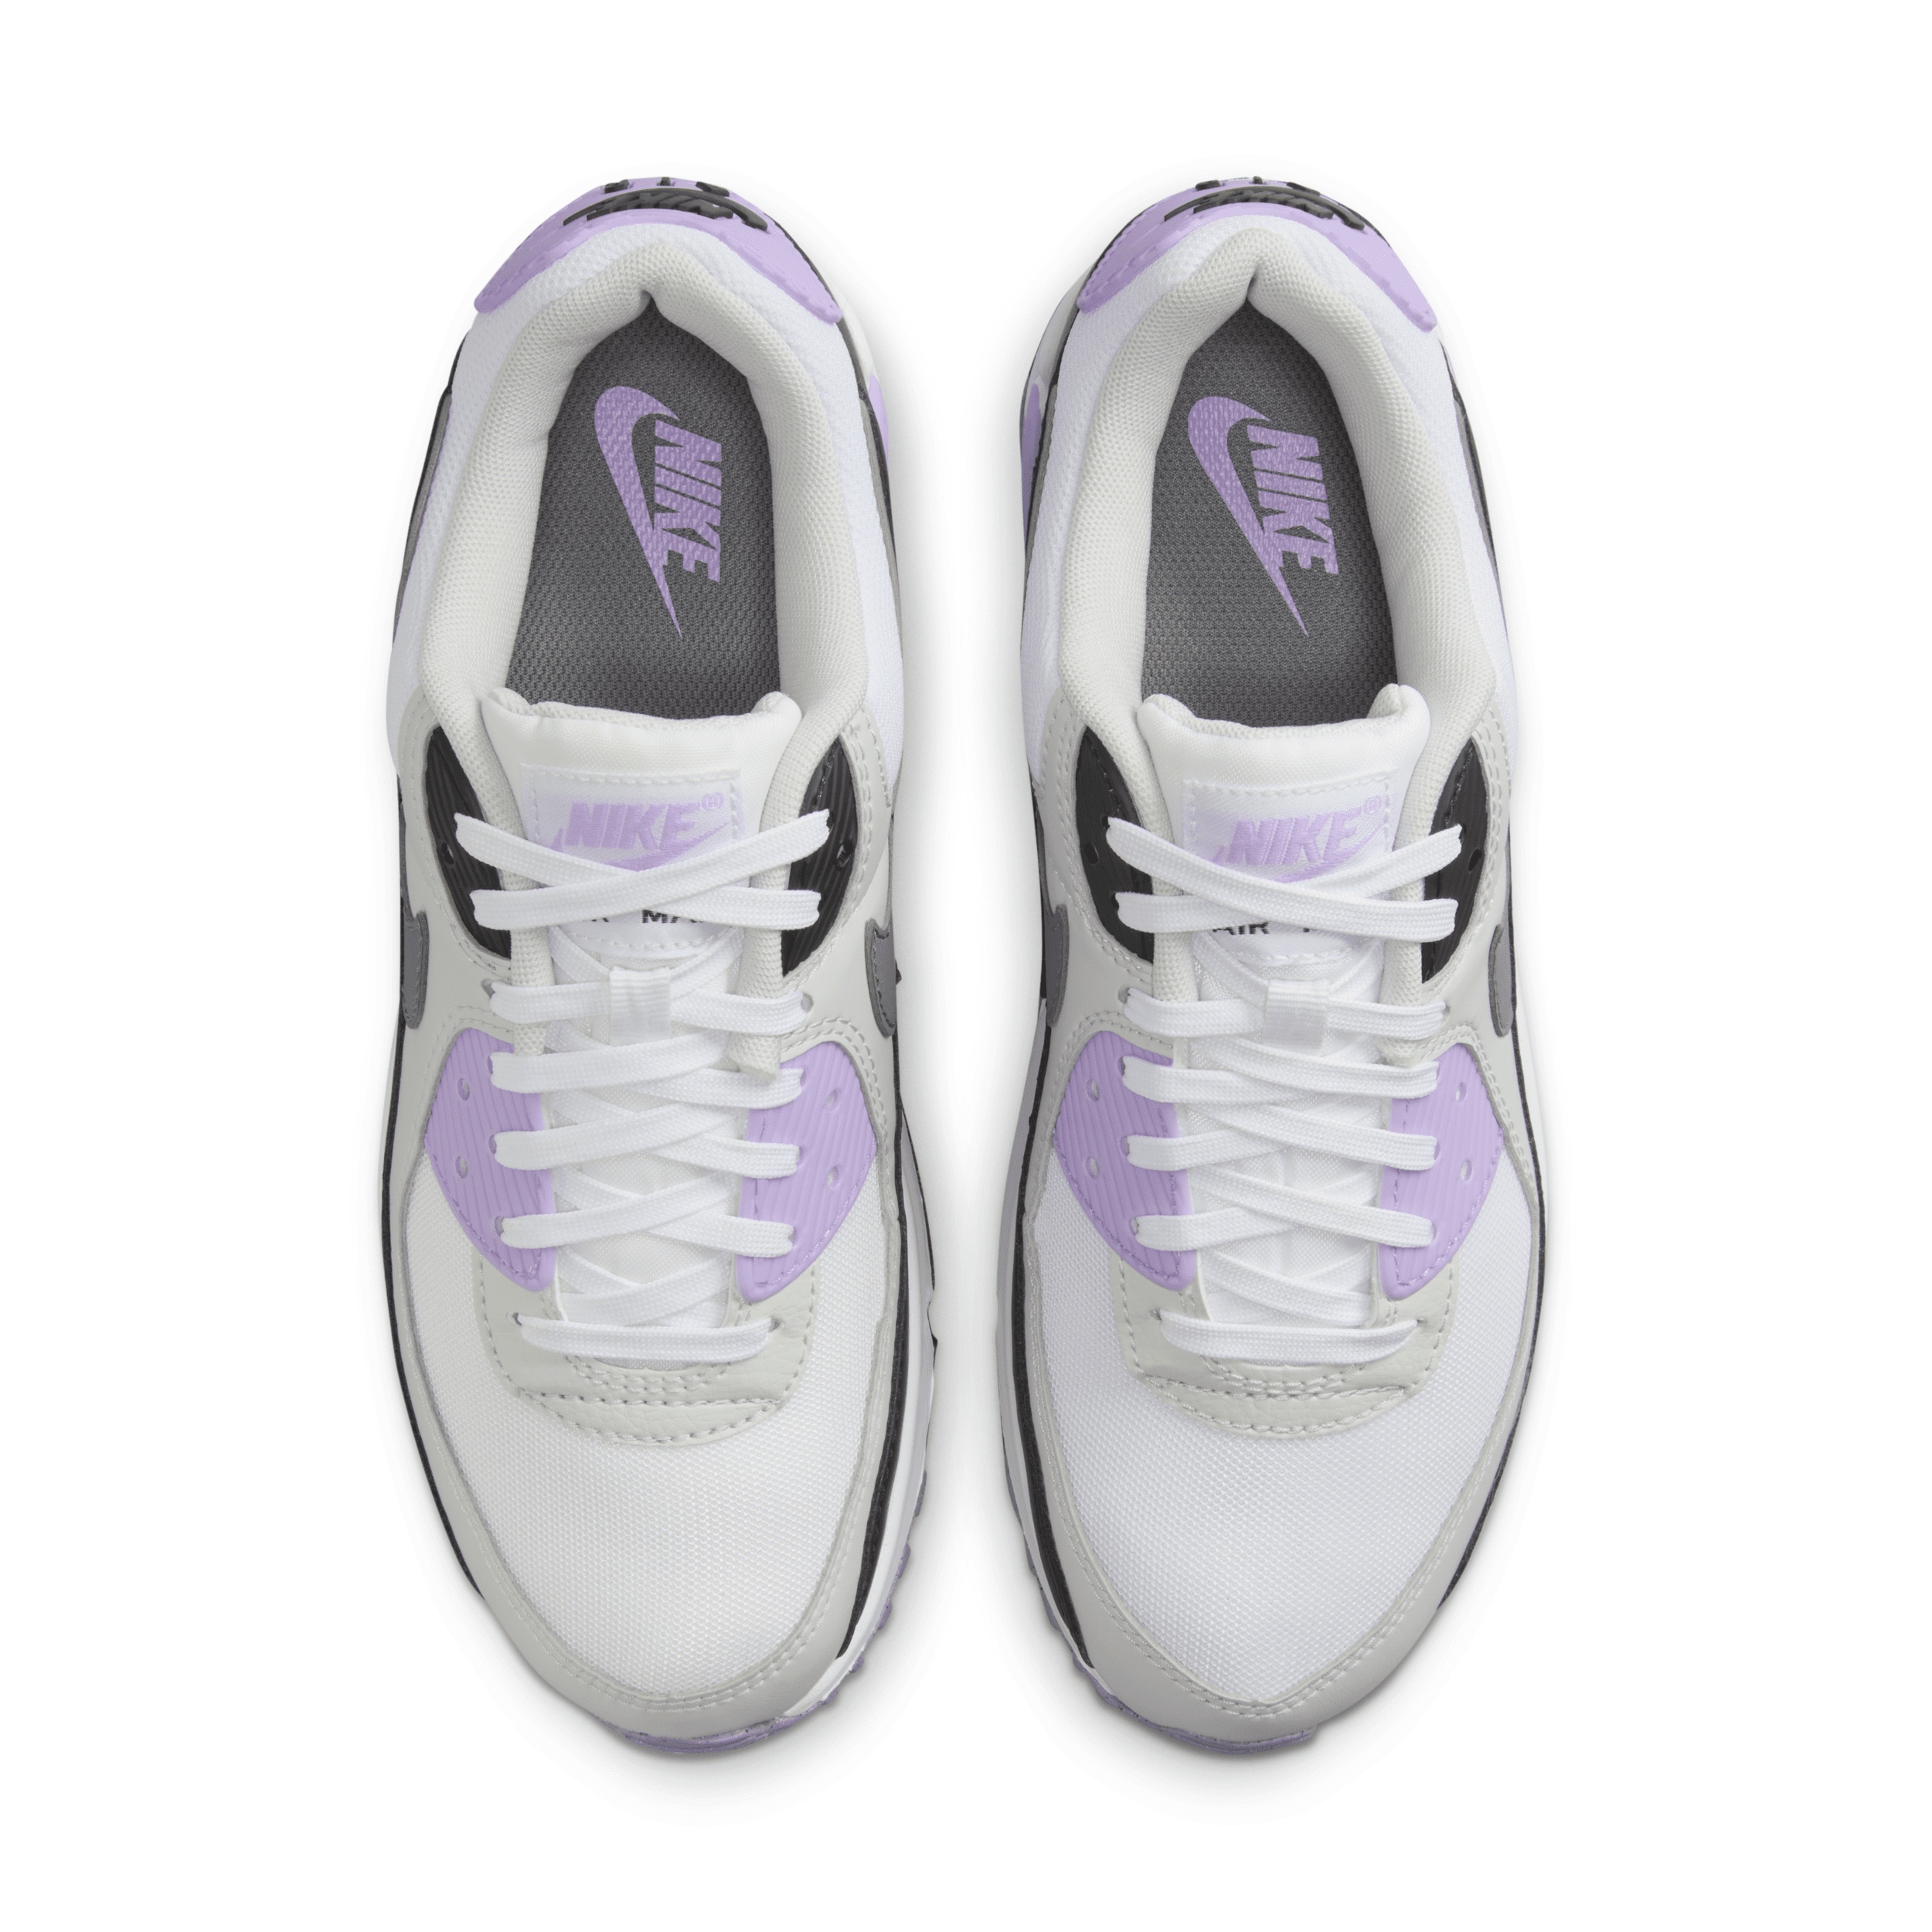 Nike Women's Air Max 90 Shoes - 5